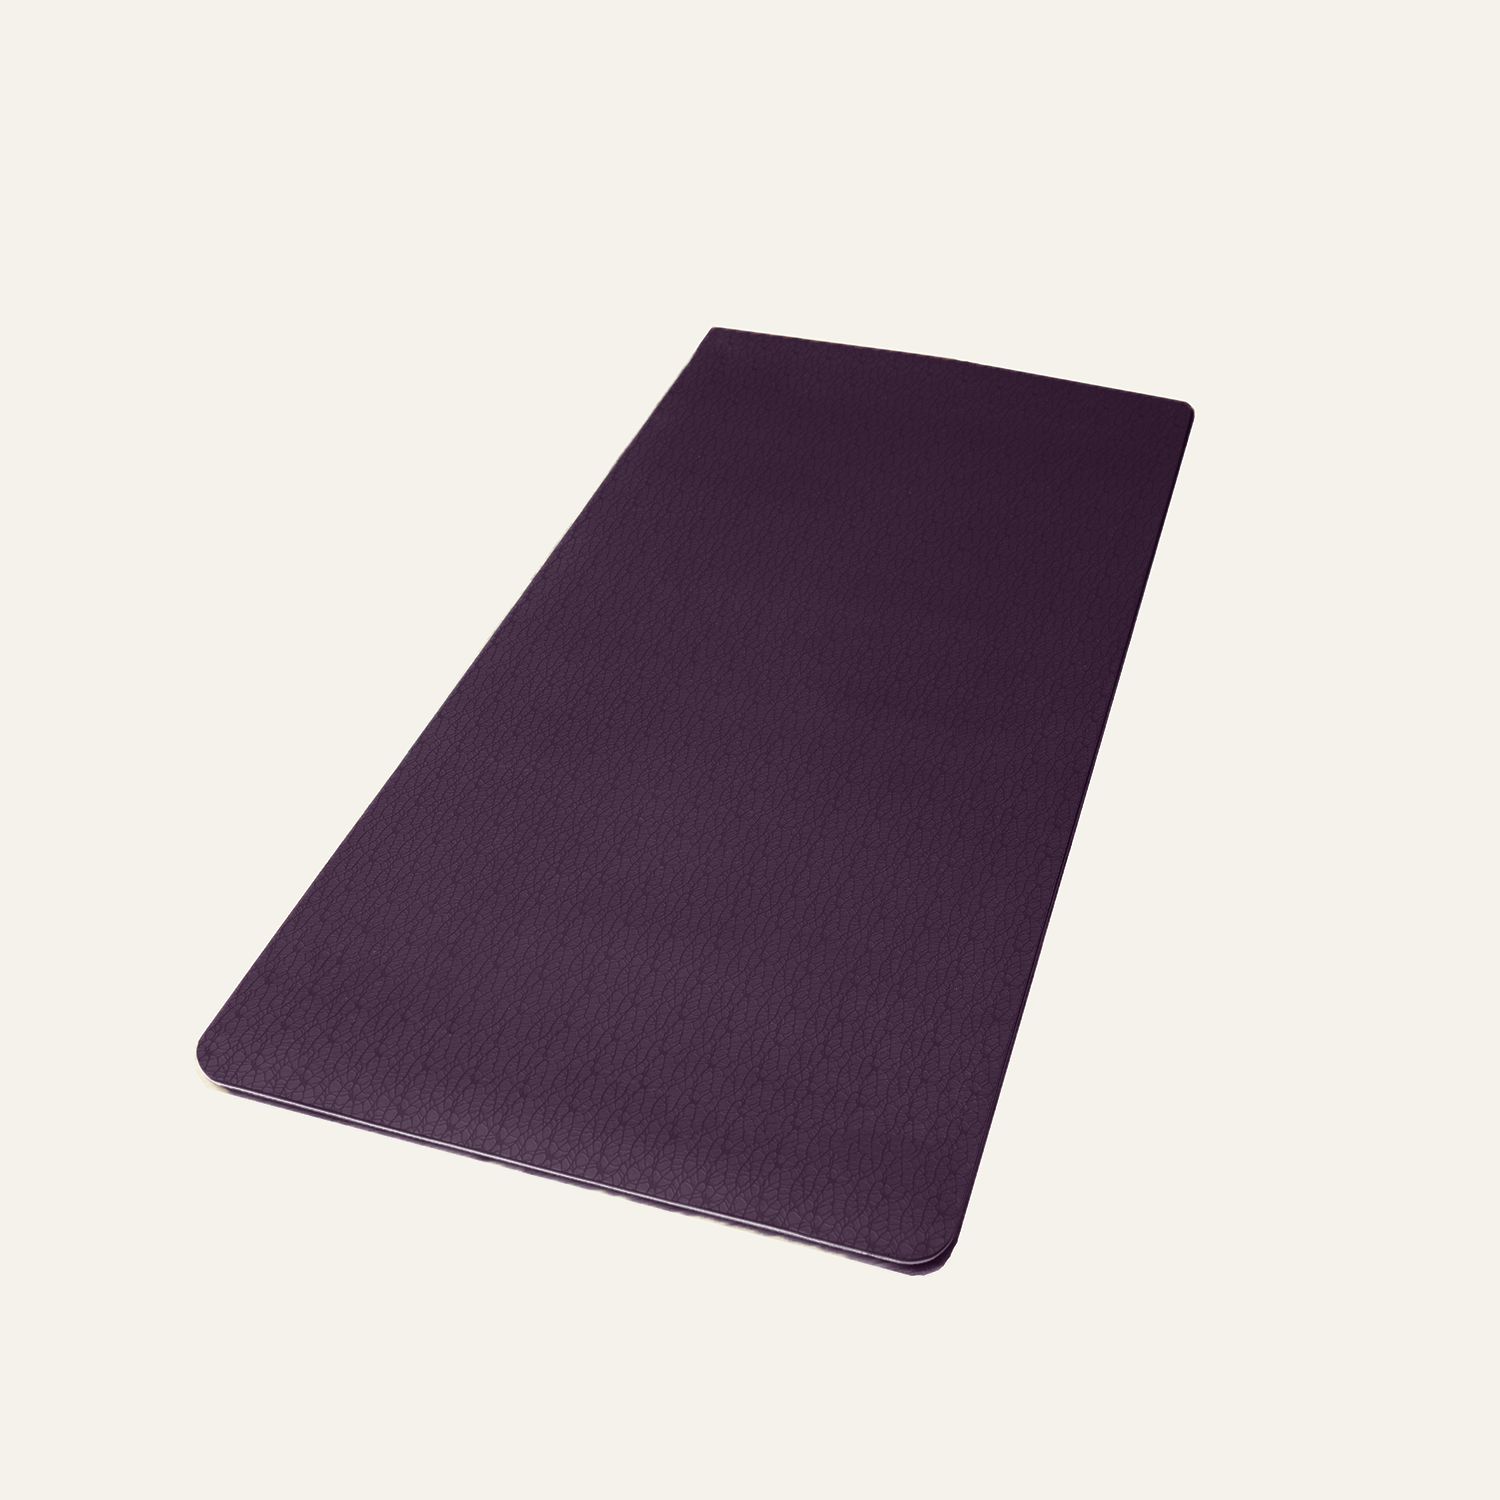  Large Yoga Mat